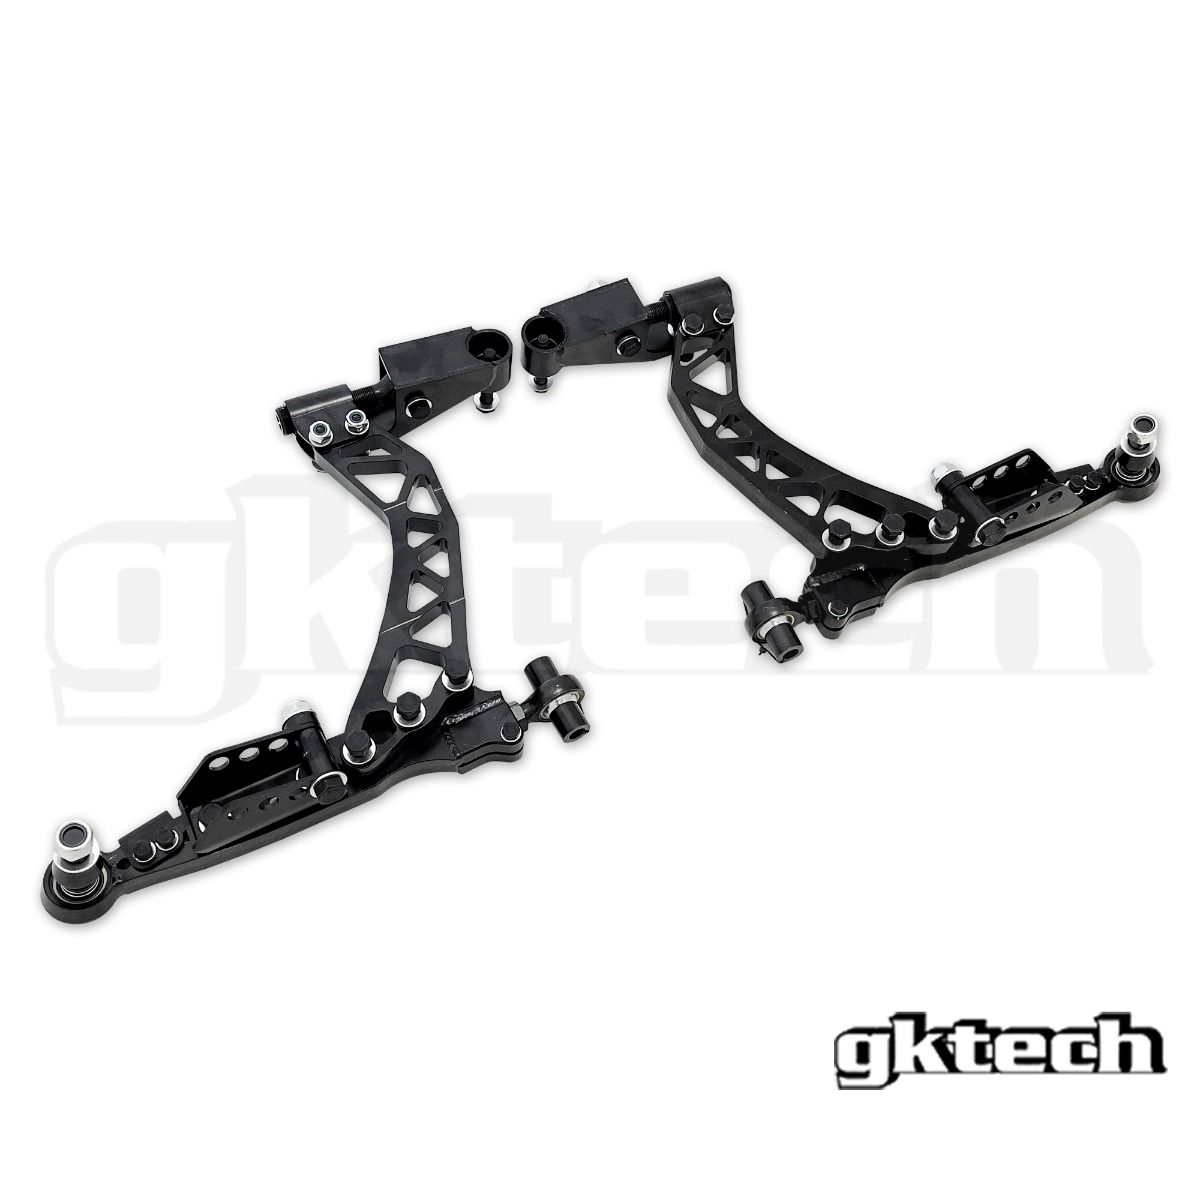 GKTech 4130 Chromoly Super Lock Lower Control Arms - Nissan Z34 370Z / G37